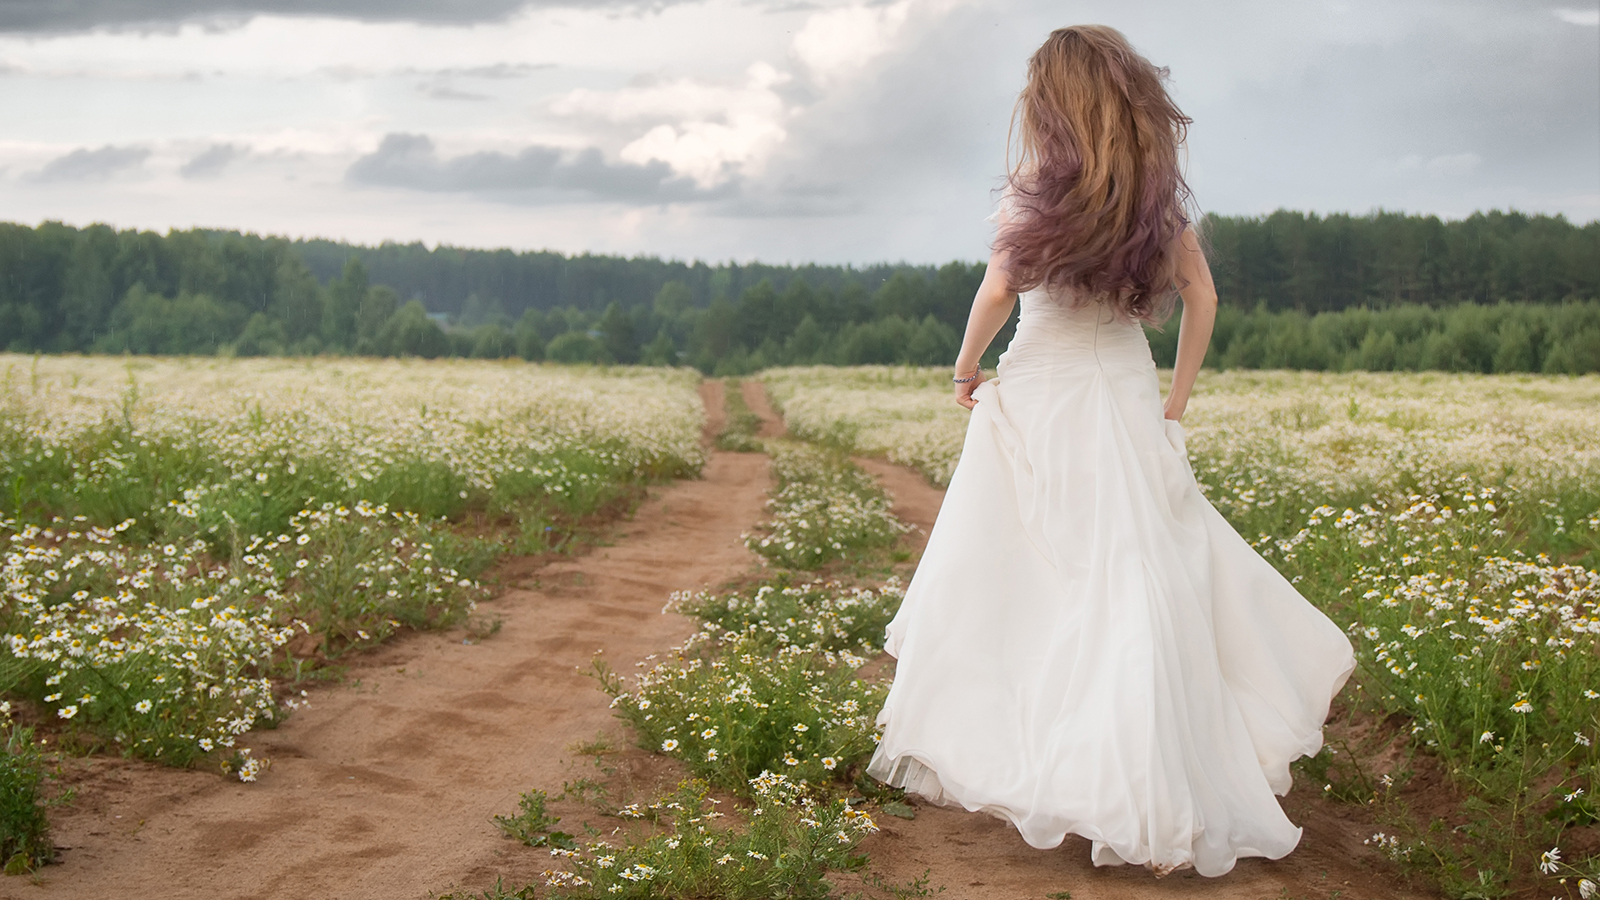 Runaway bride. Woman in a wedding dress runs on flower field.